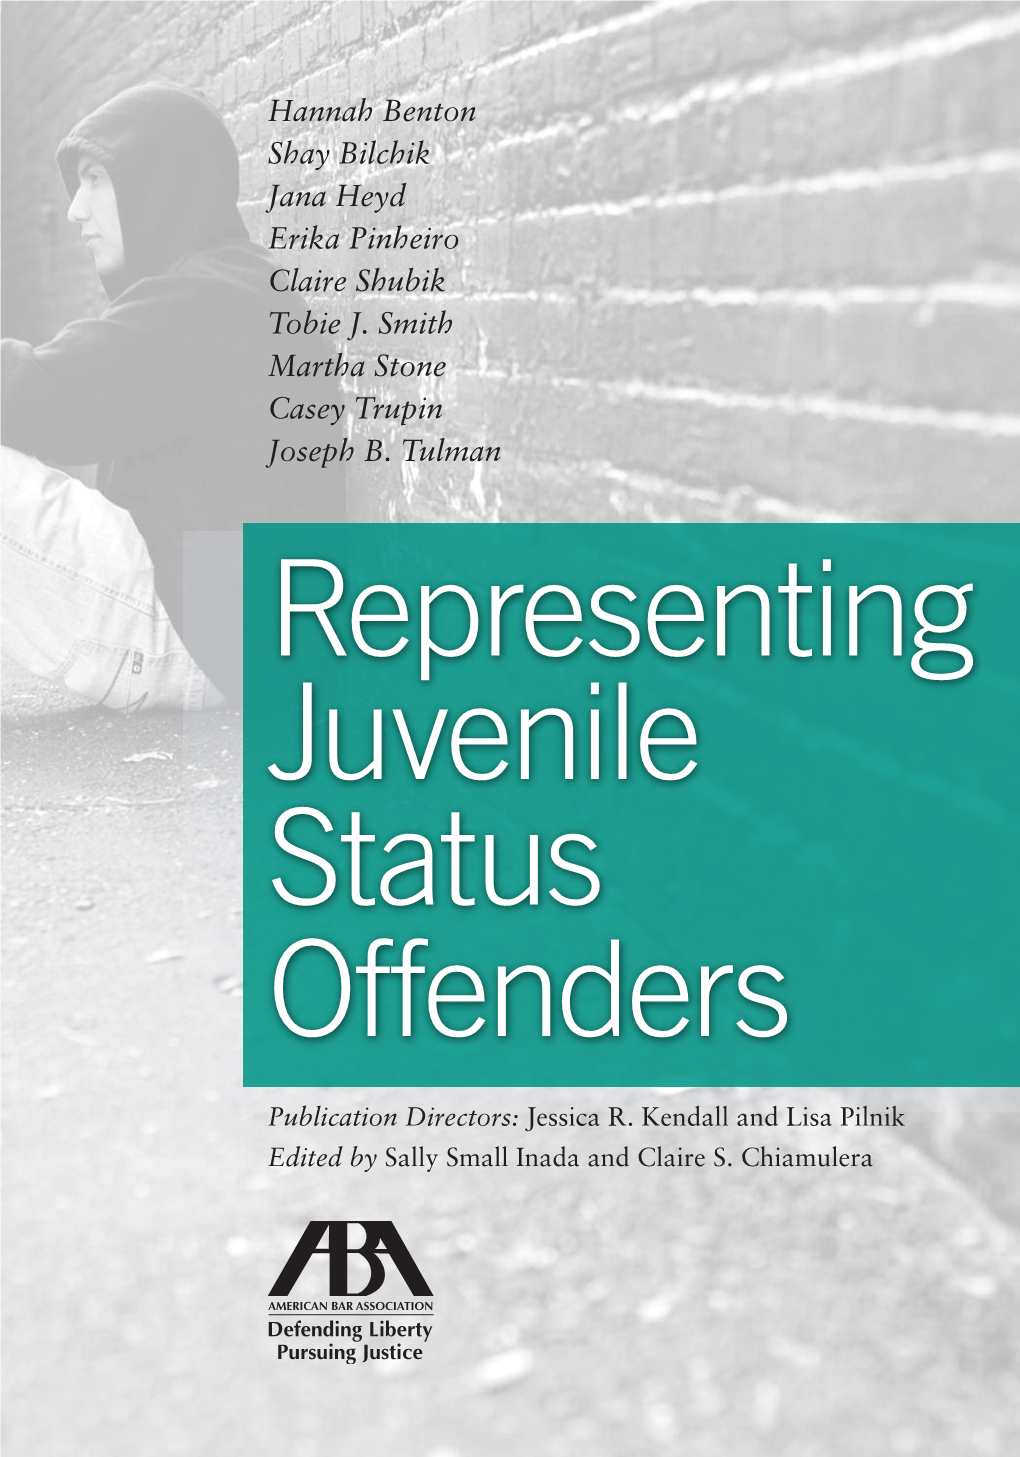 Representing Juvenile Status Offenders, Hannah Benton, Et Al